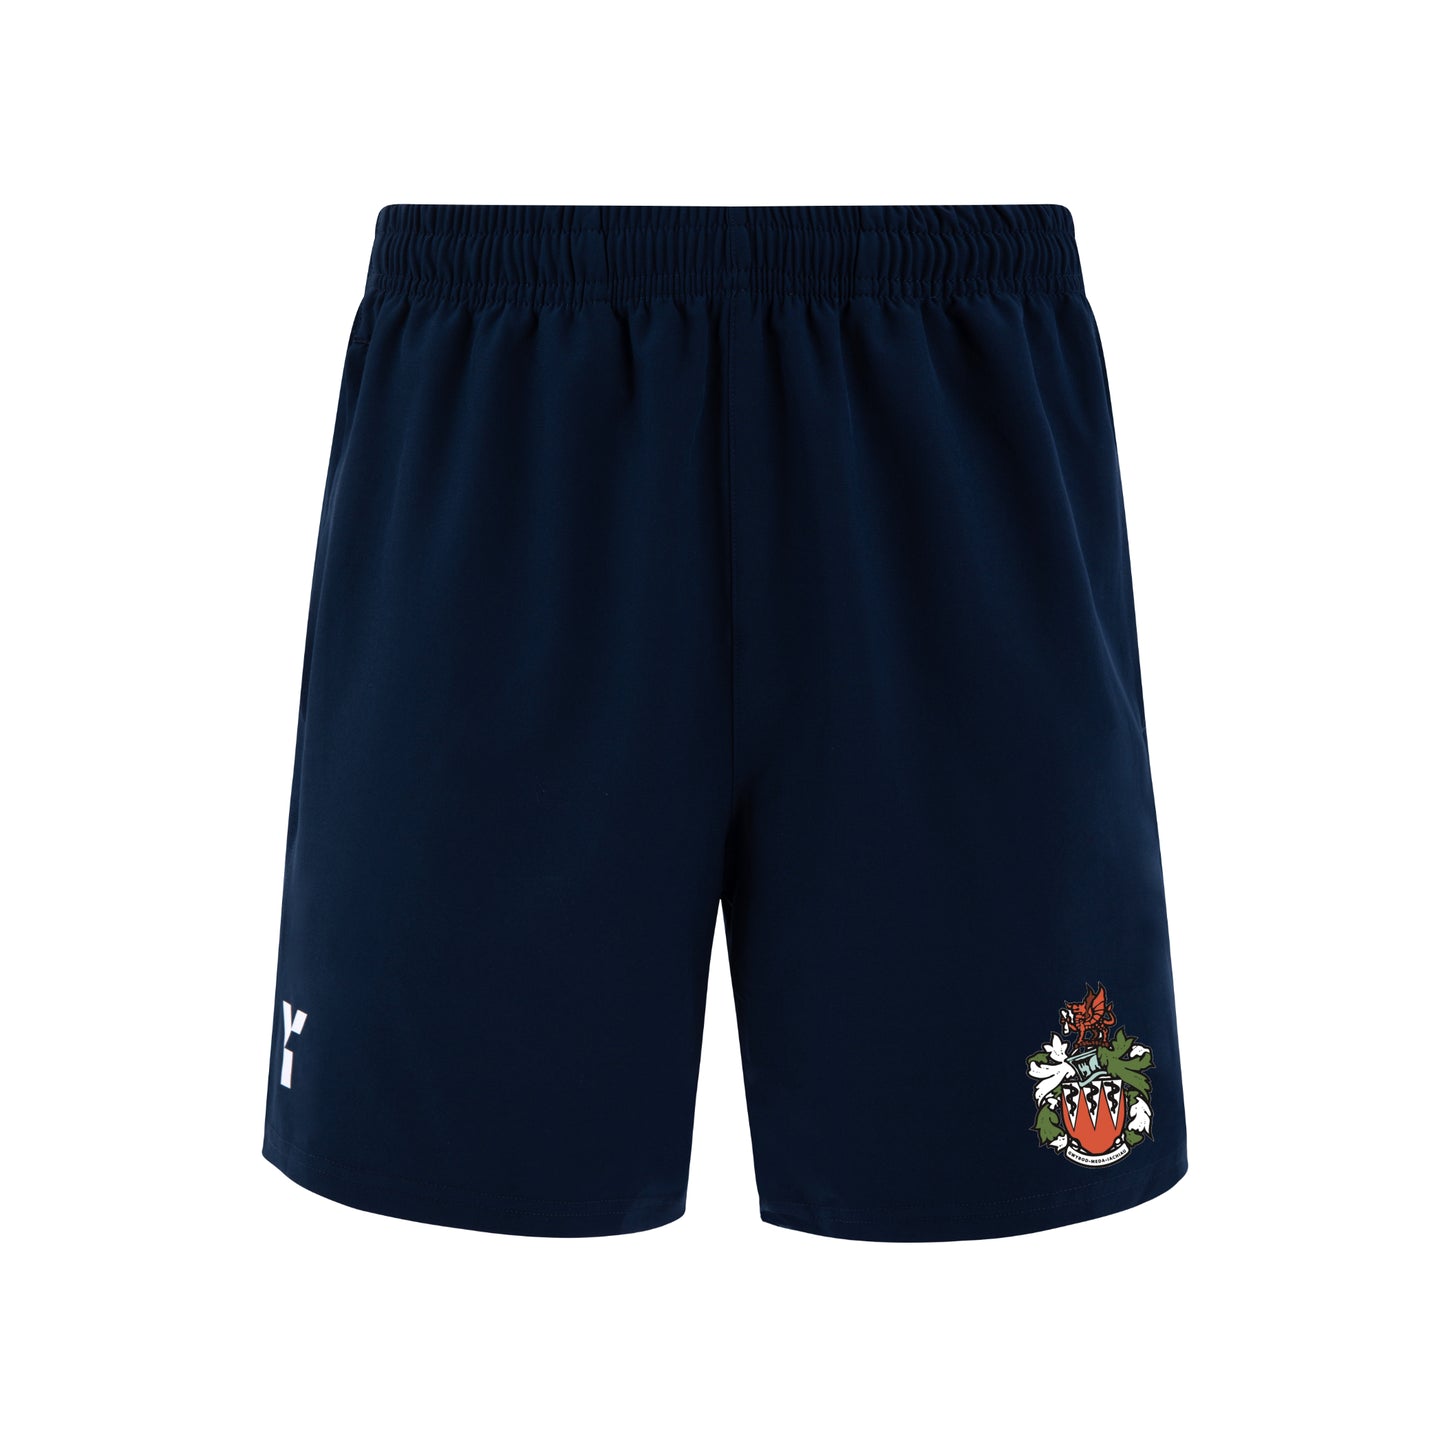 Cardiff Medics HC - Shorts Mens Navy